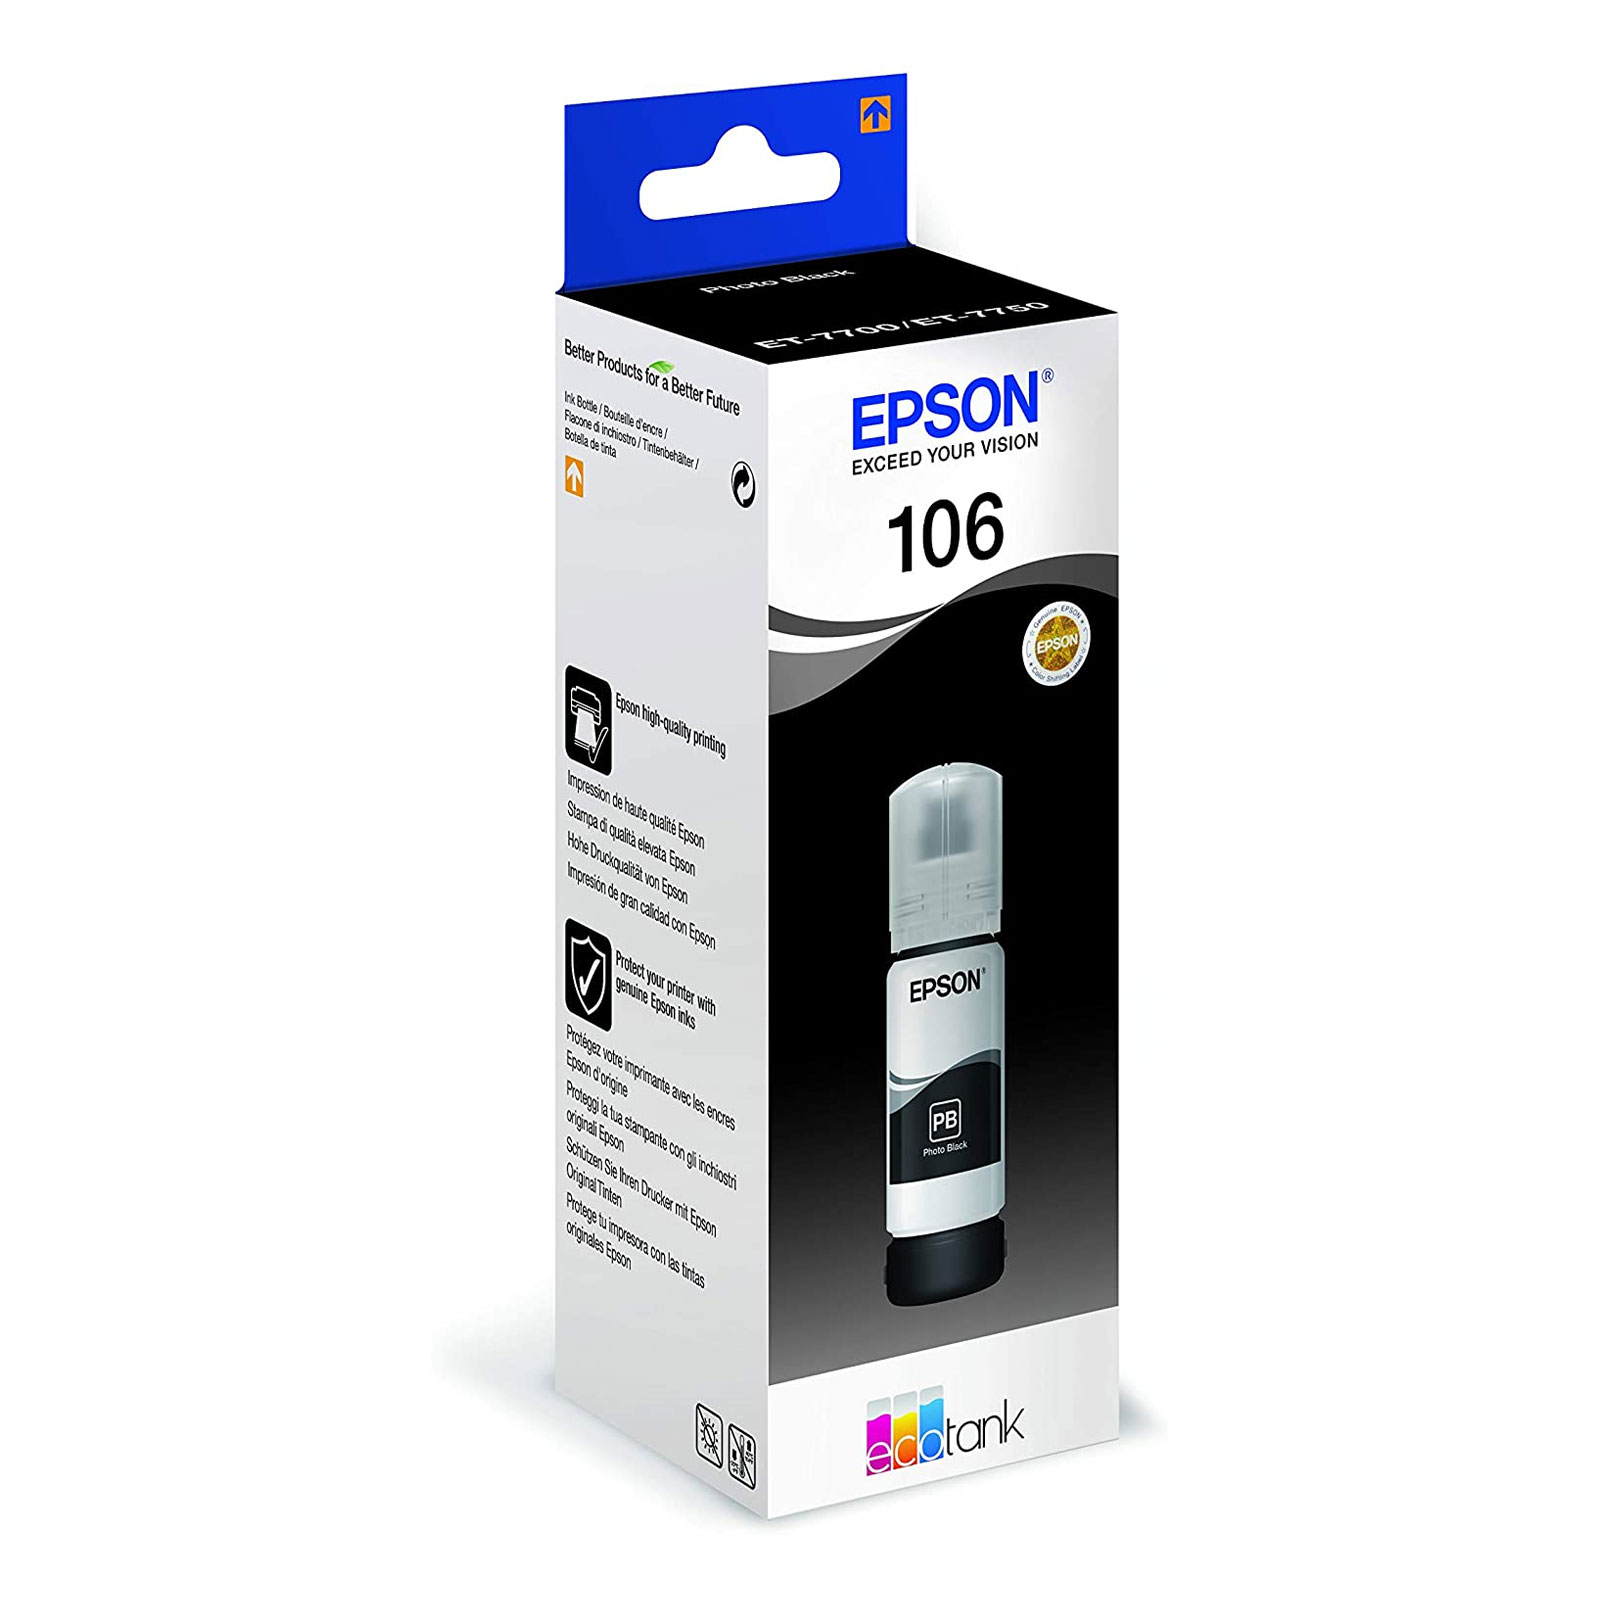 Epson C13T00R140 EcoTank ink bottle 106 Photo Black